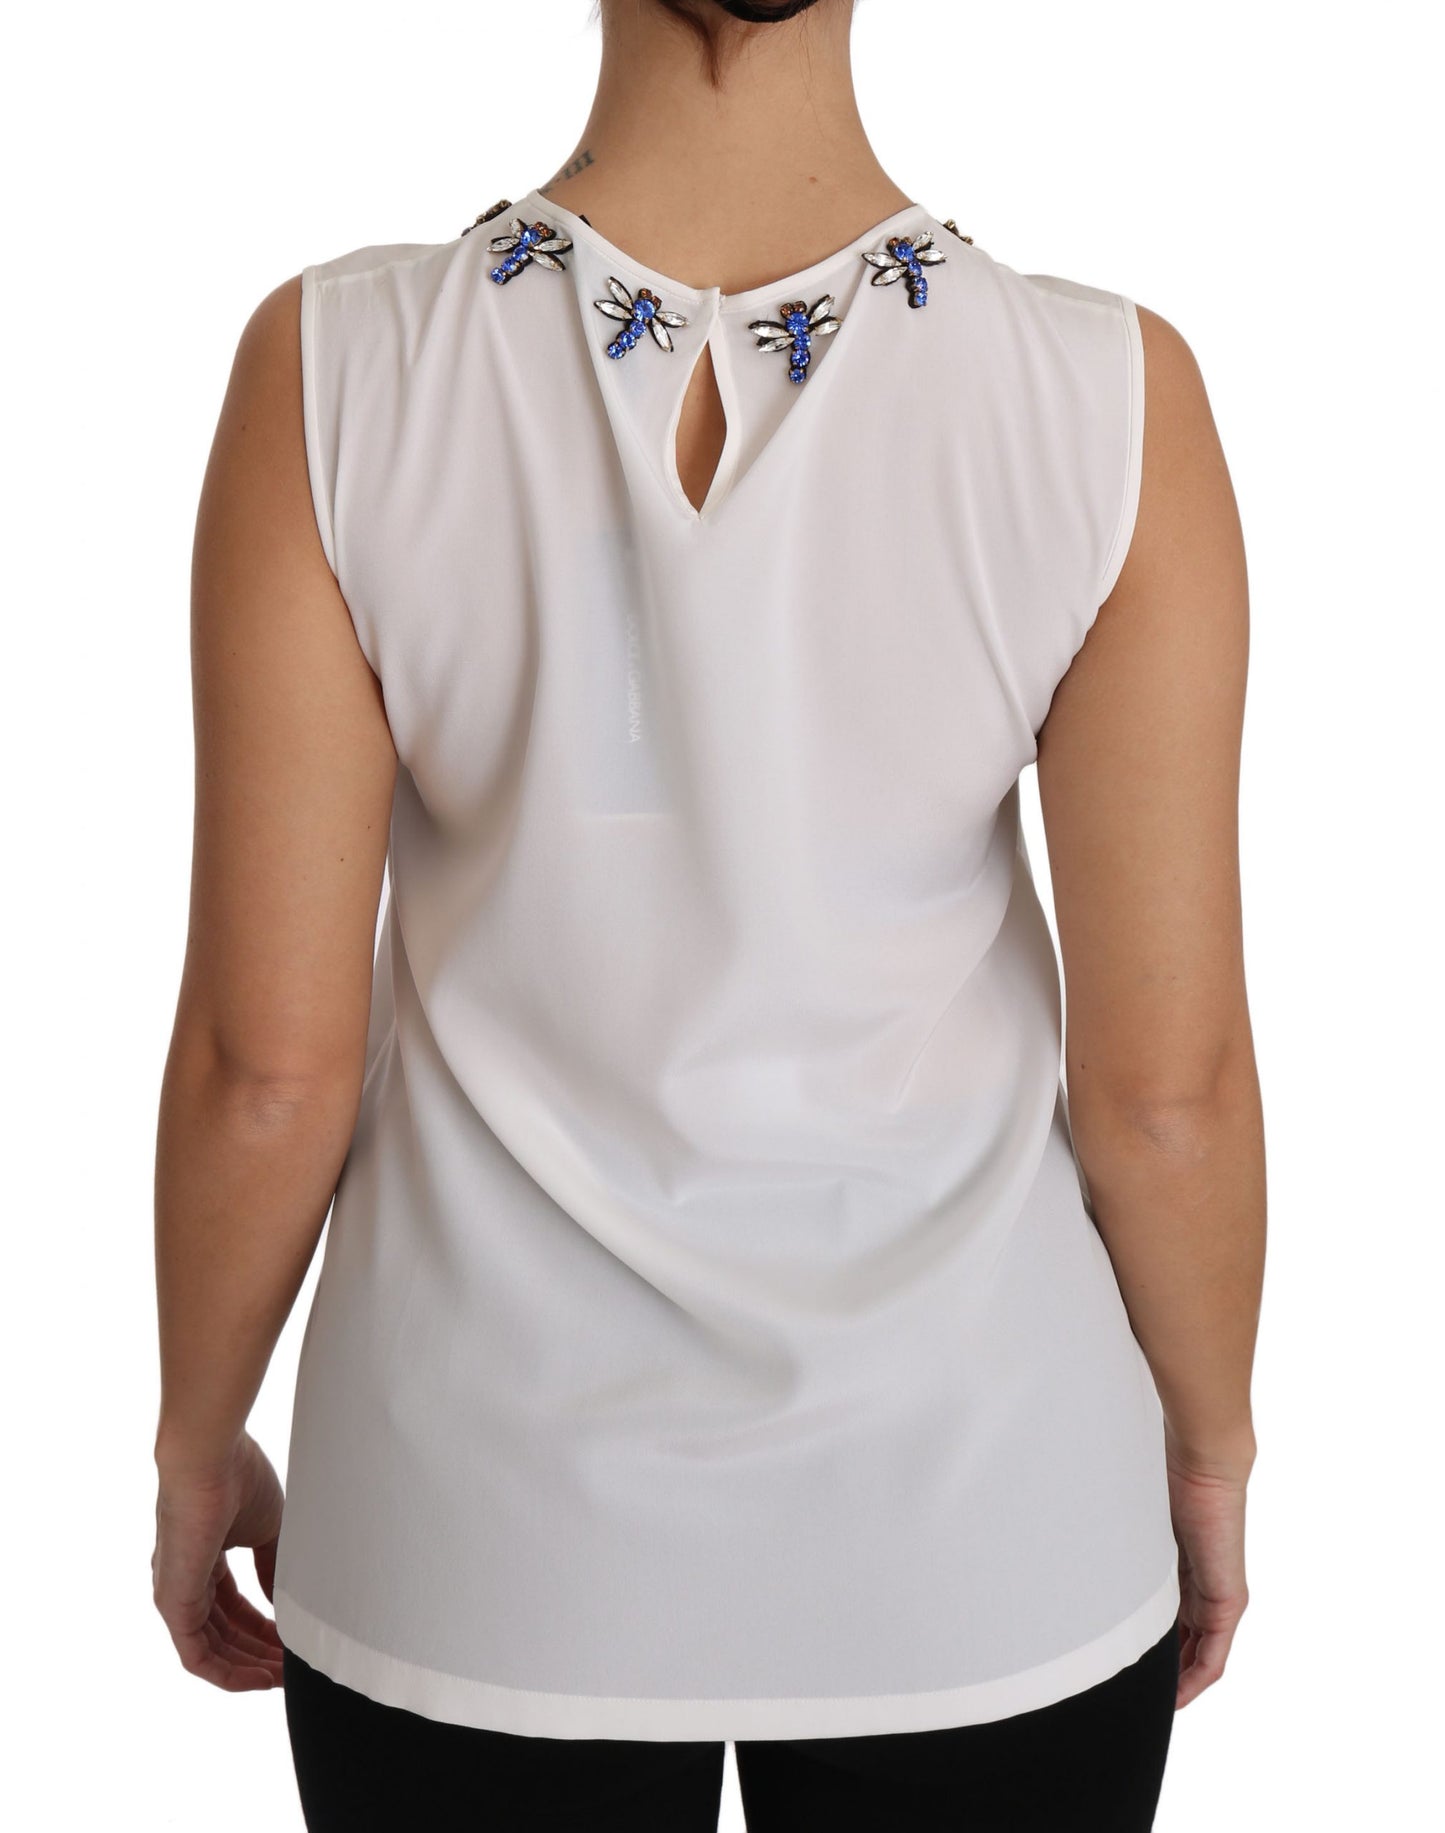 Dolce & Gabbana White Silk Embellished Crystal Dragonfly Top